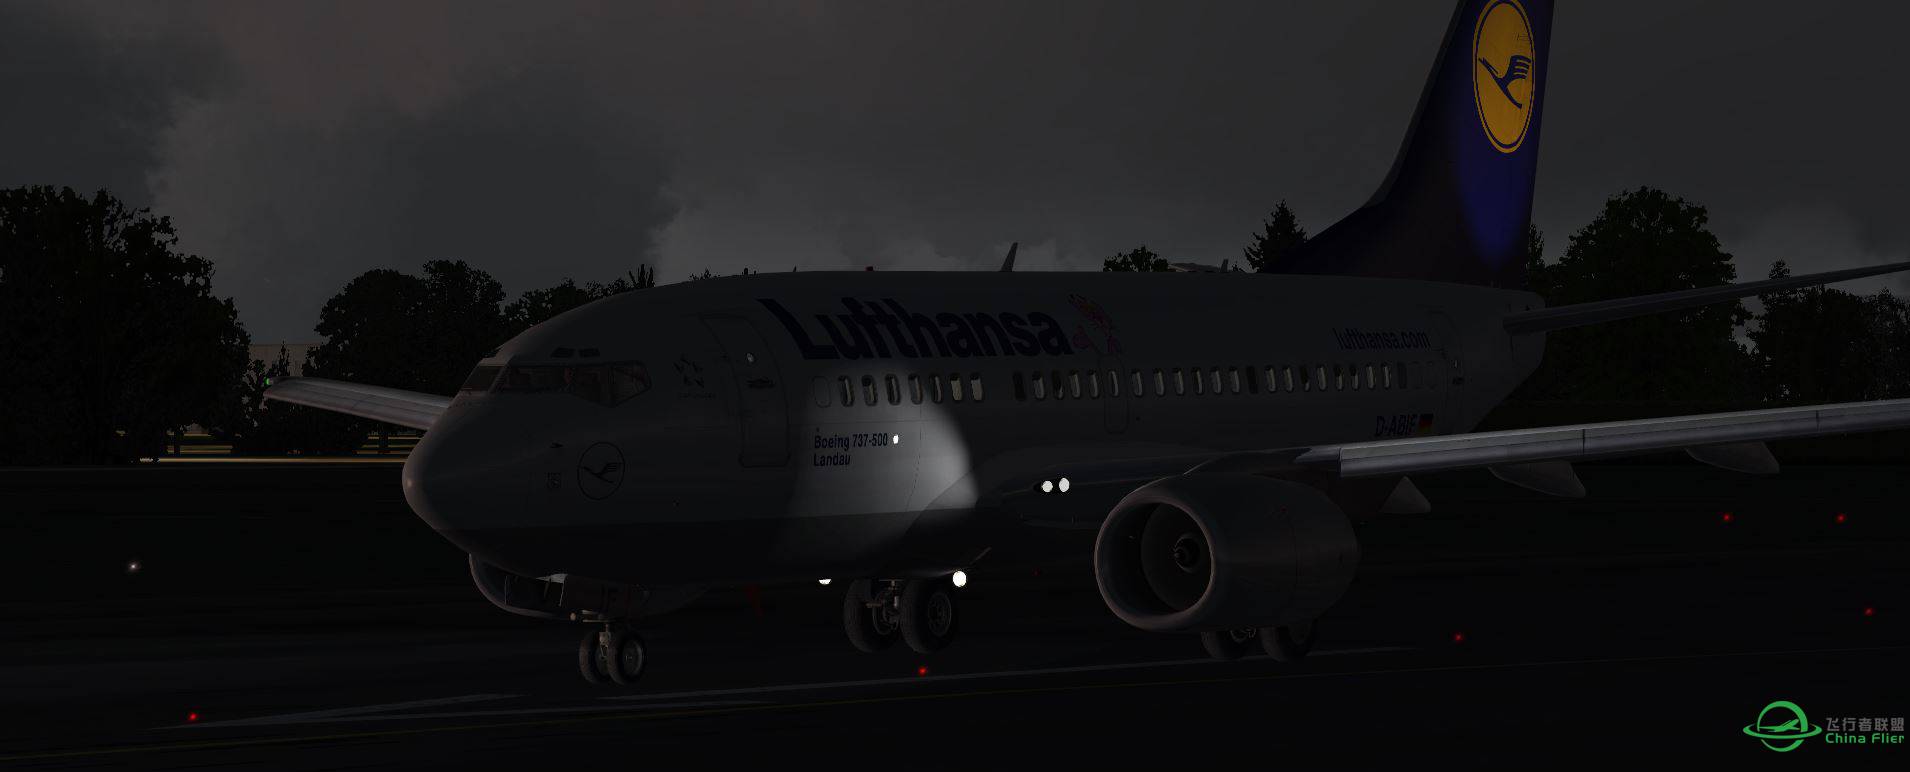 B737 Lufthansa-8573 